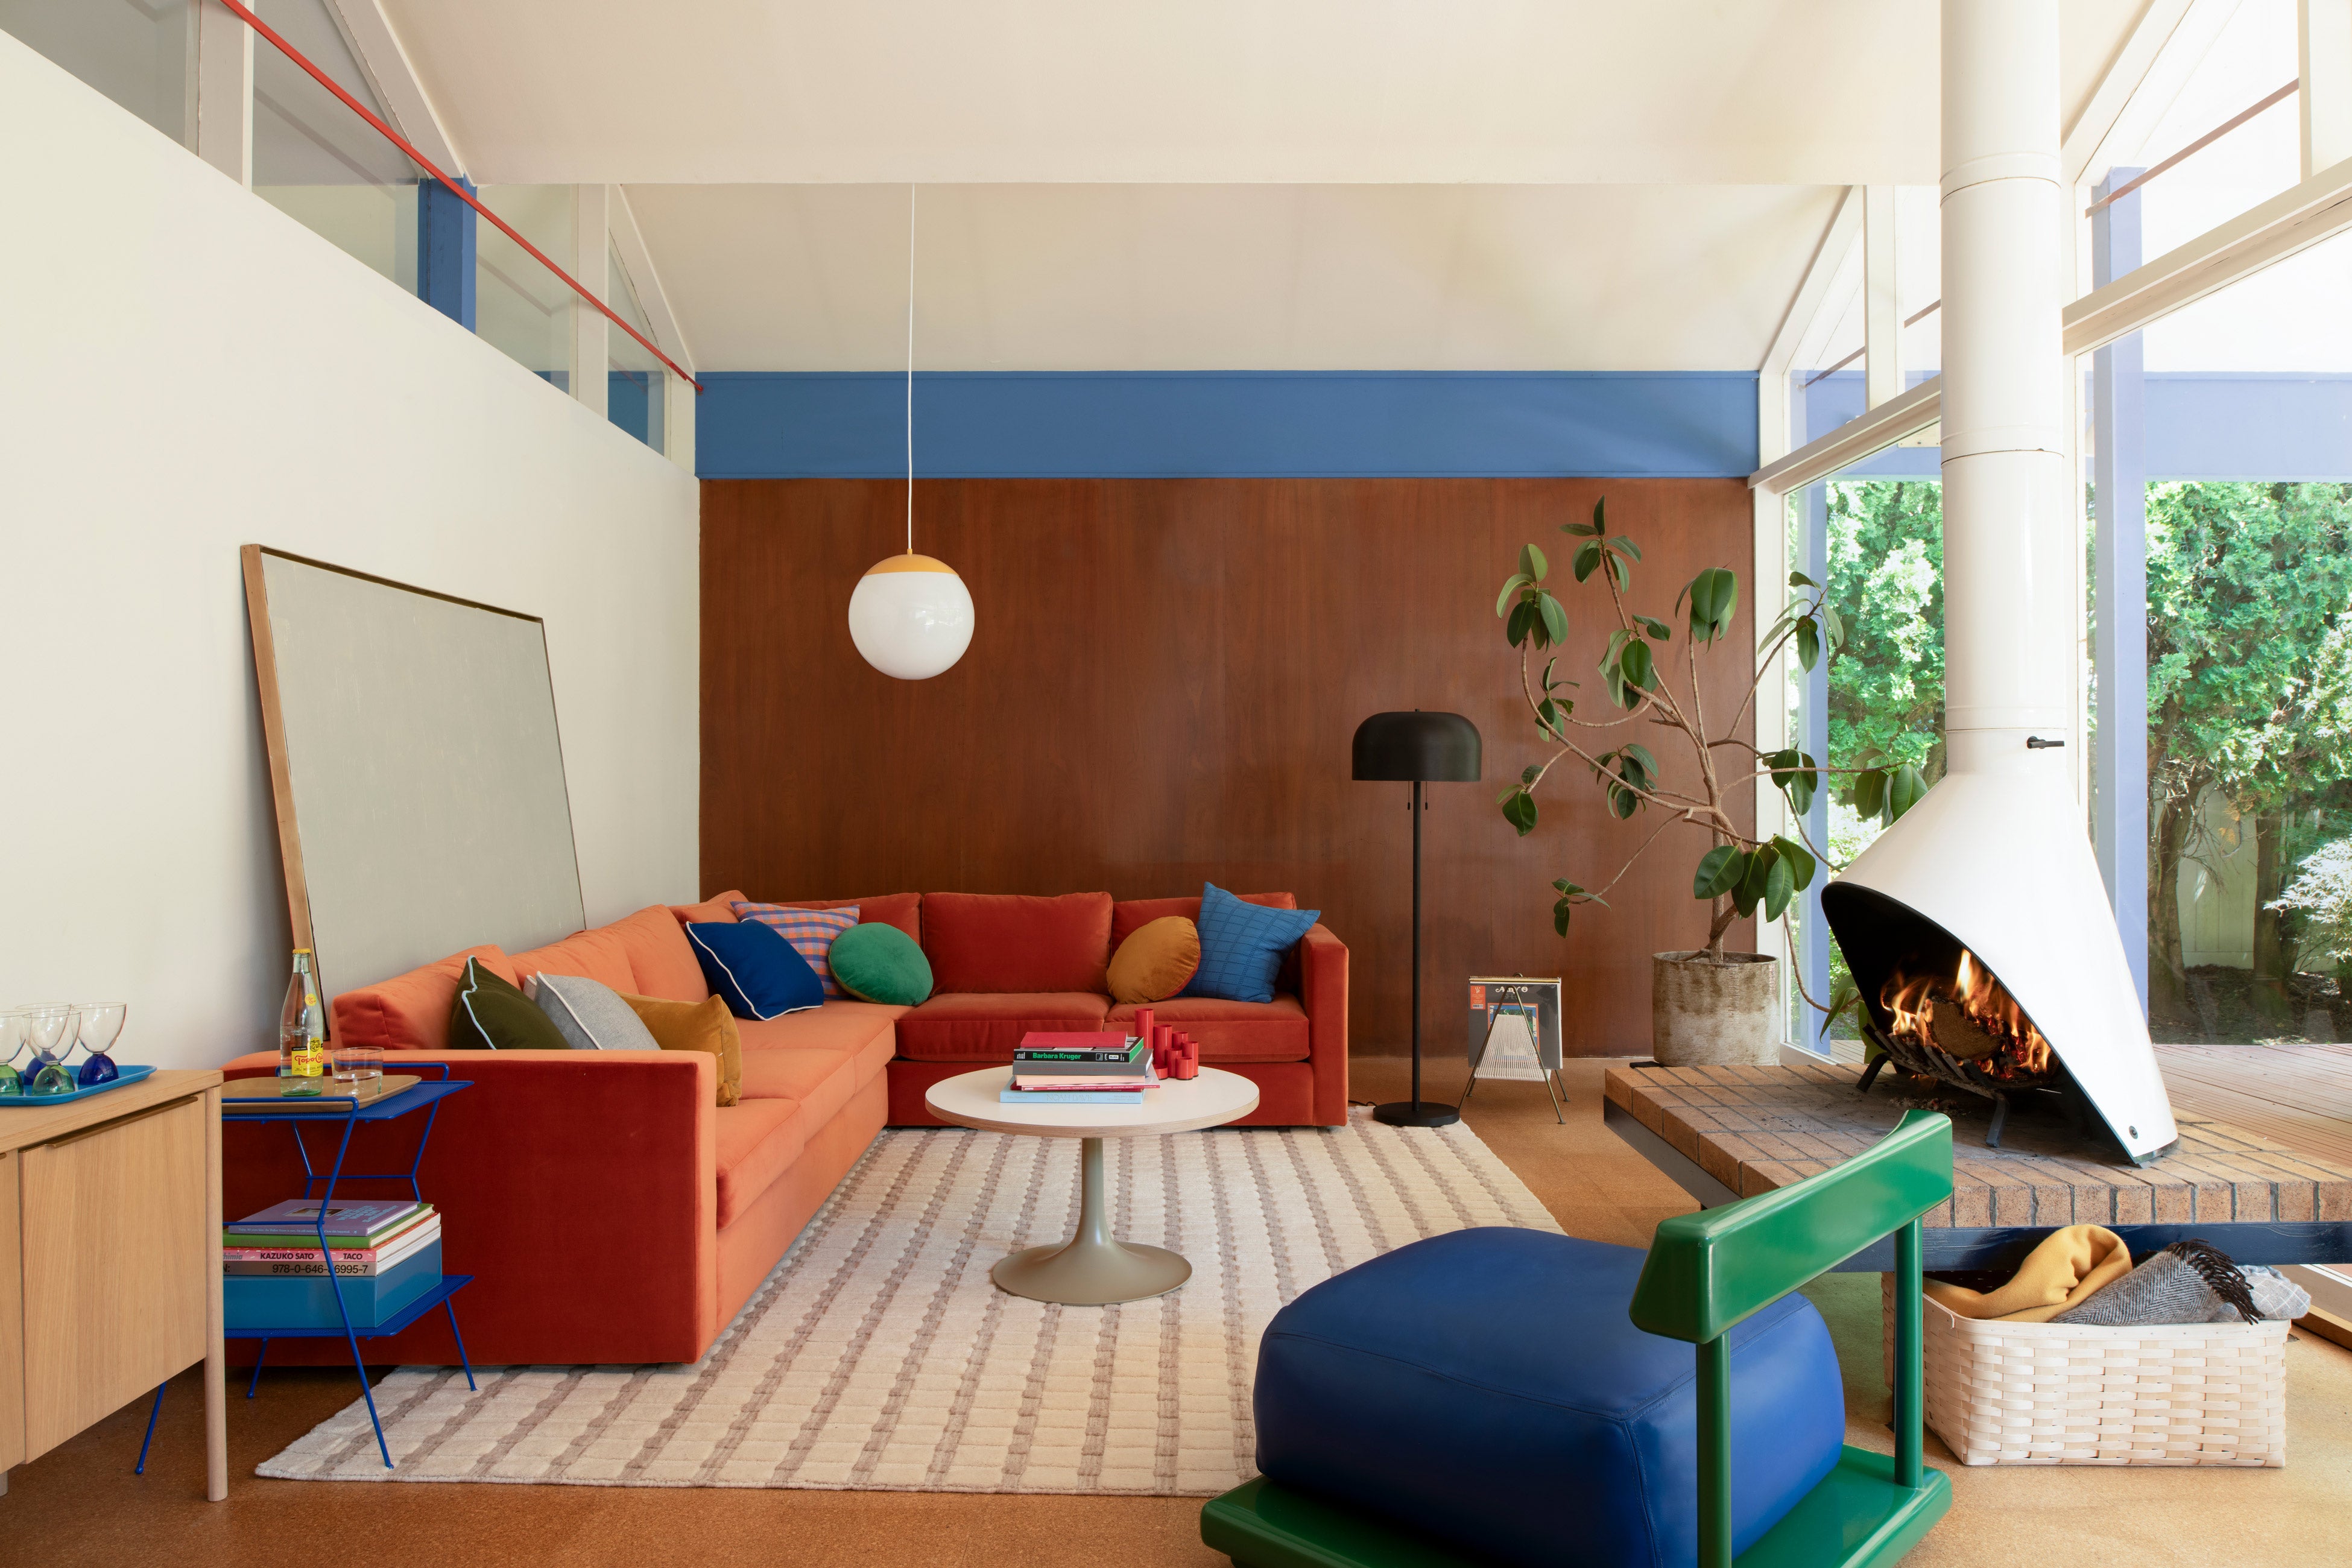 Modern living room bursting with color.